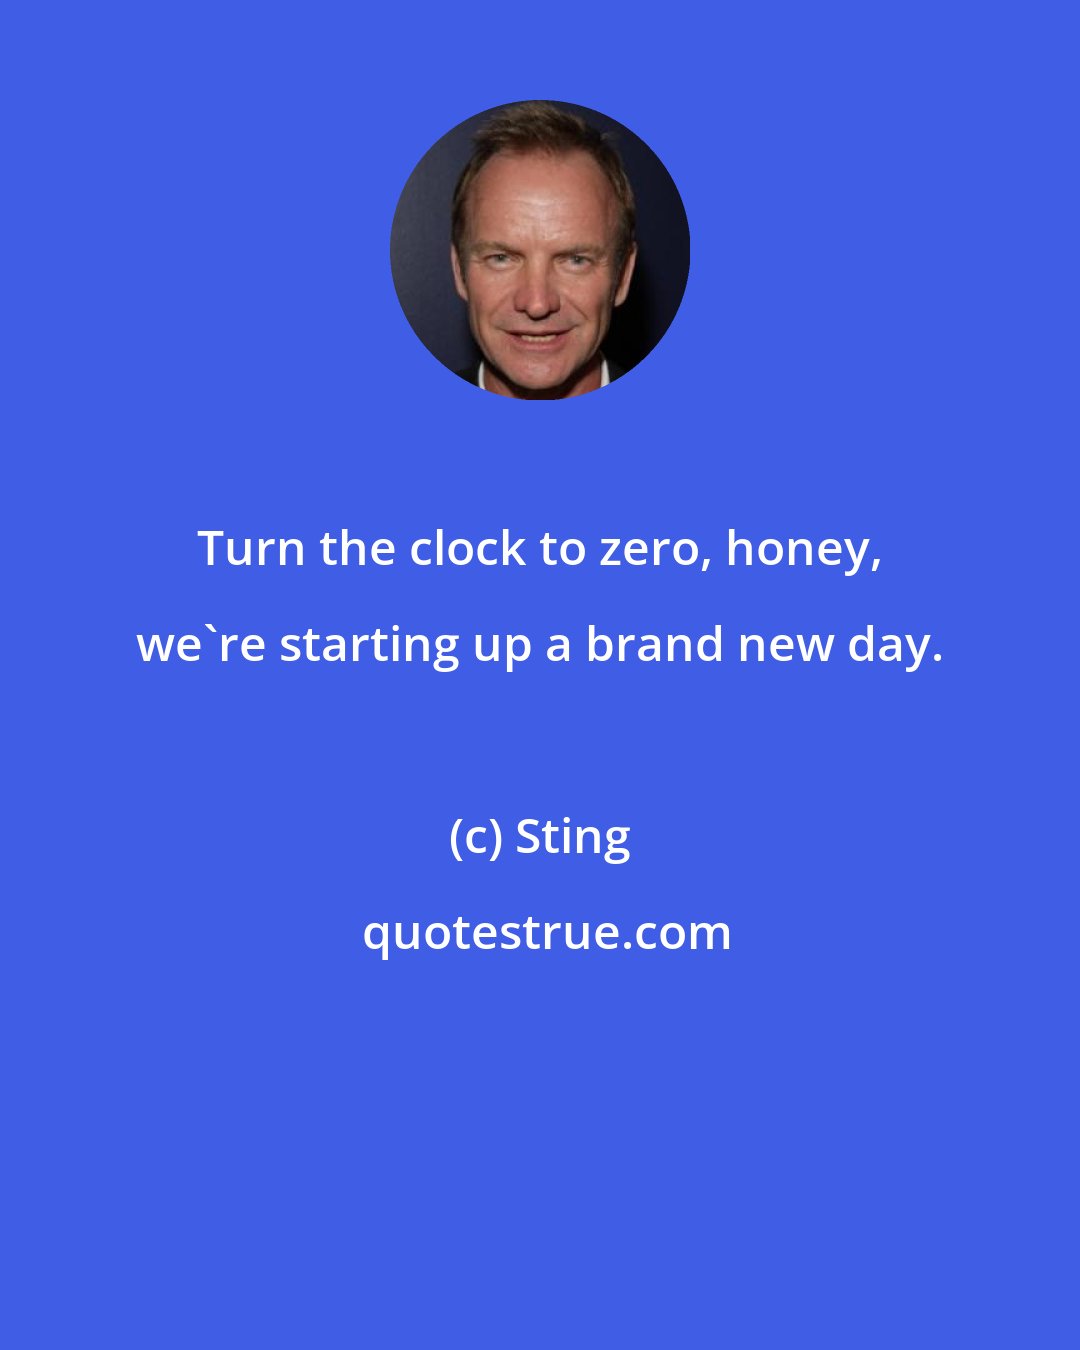 Sting: Turn the clock to zero, honey, we're starting up a brand new day.